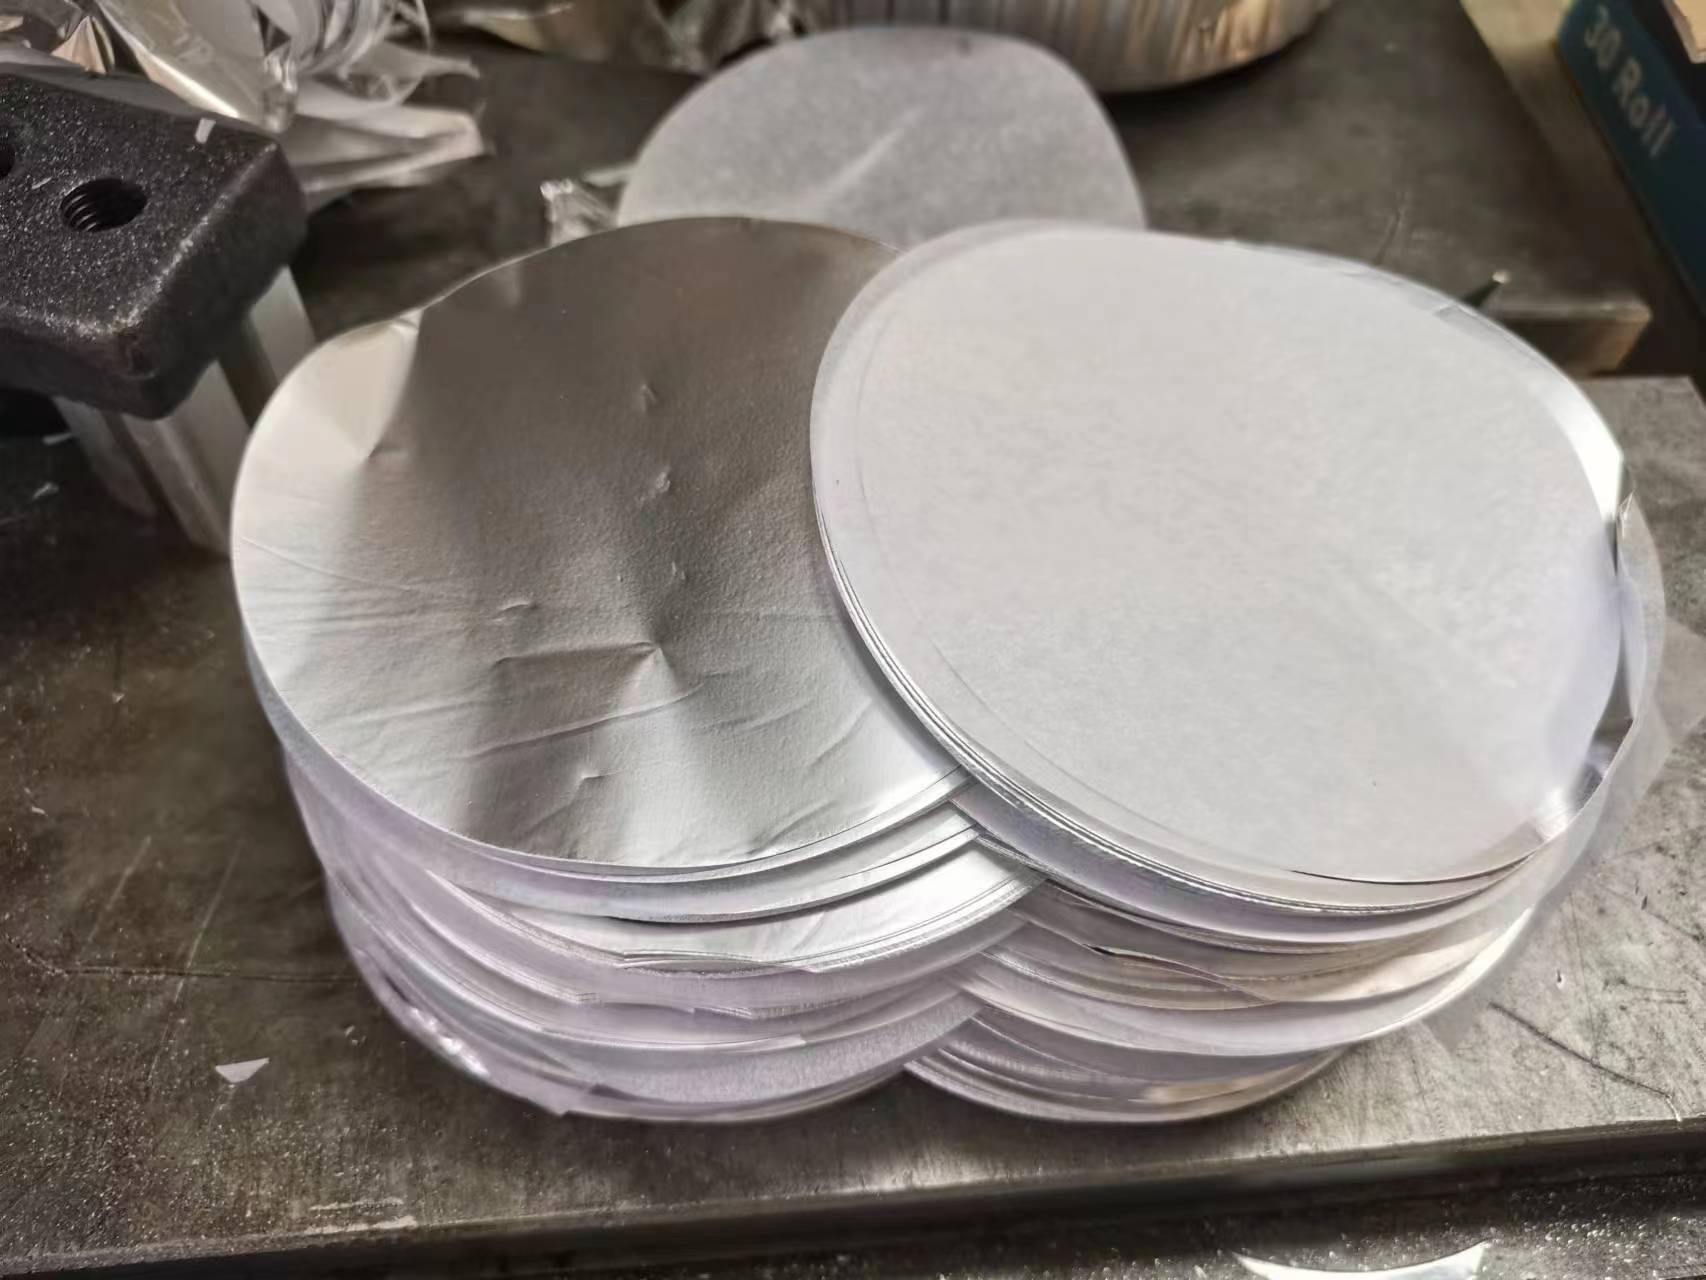 Professional Round Square Aluminum Foil Shisha Paper Sheet With Hole For Hookah Shisha Accessories